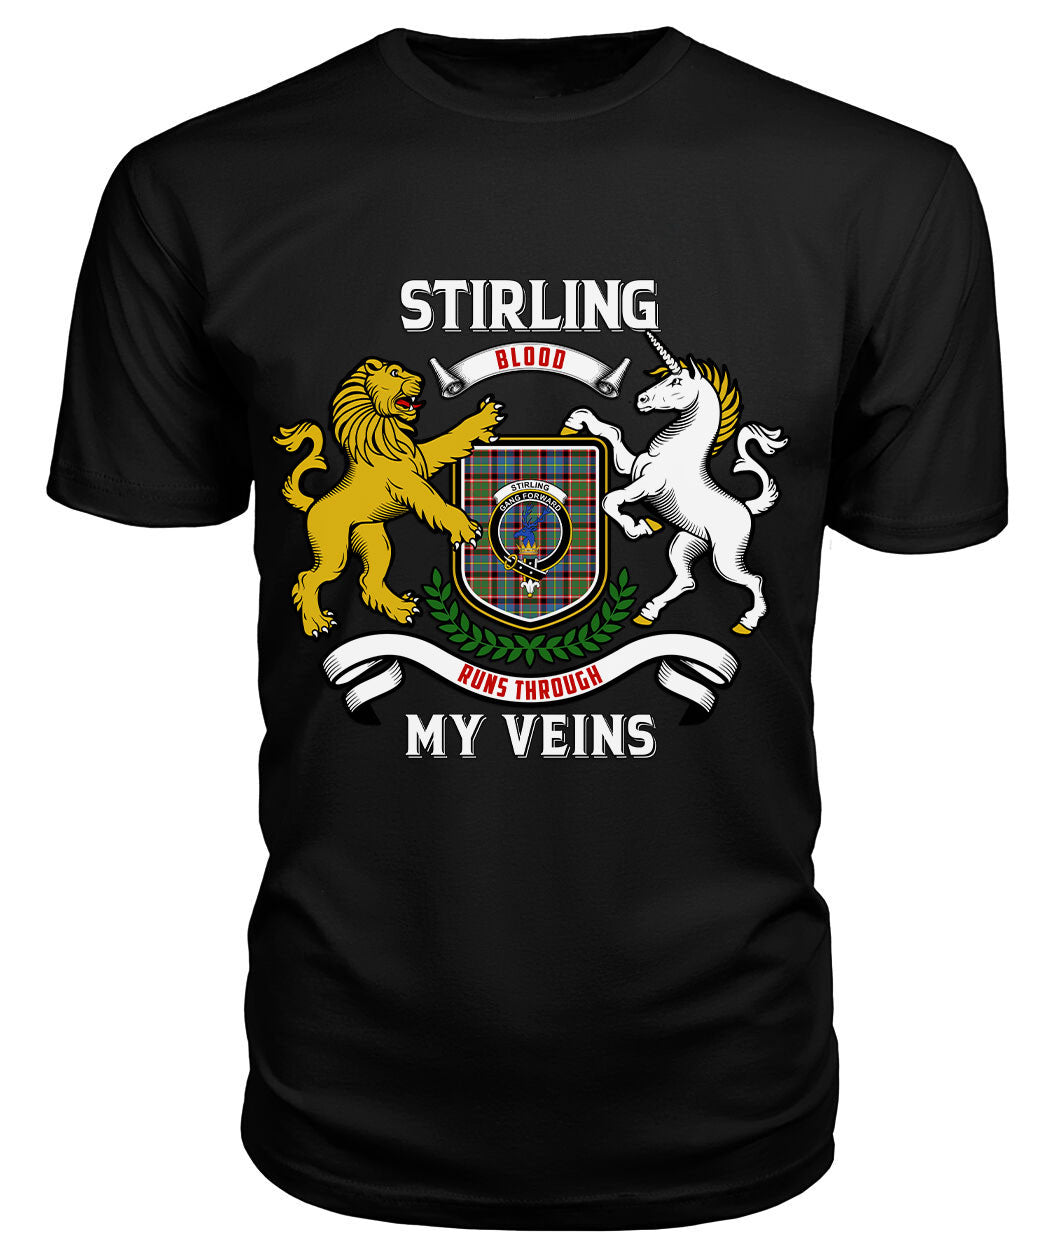 Stirling (of Cadder-Present Chief) Tartan Crest 2D T-shirt - Blood Runs Through My Veins Style